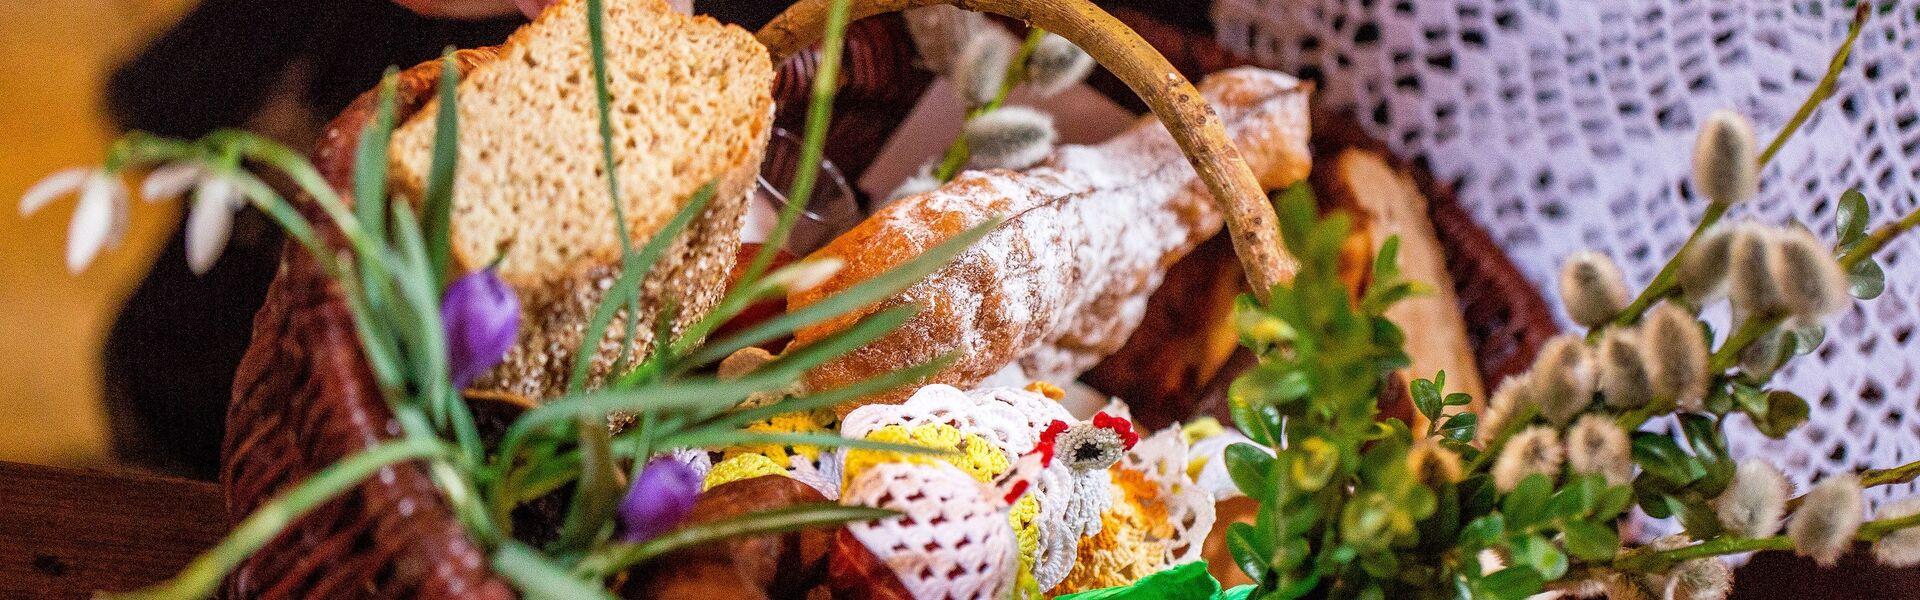 Bild: Traditioneller Osterkorb und Bräuche am Karsamstag